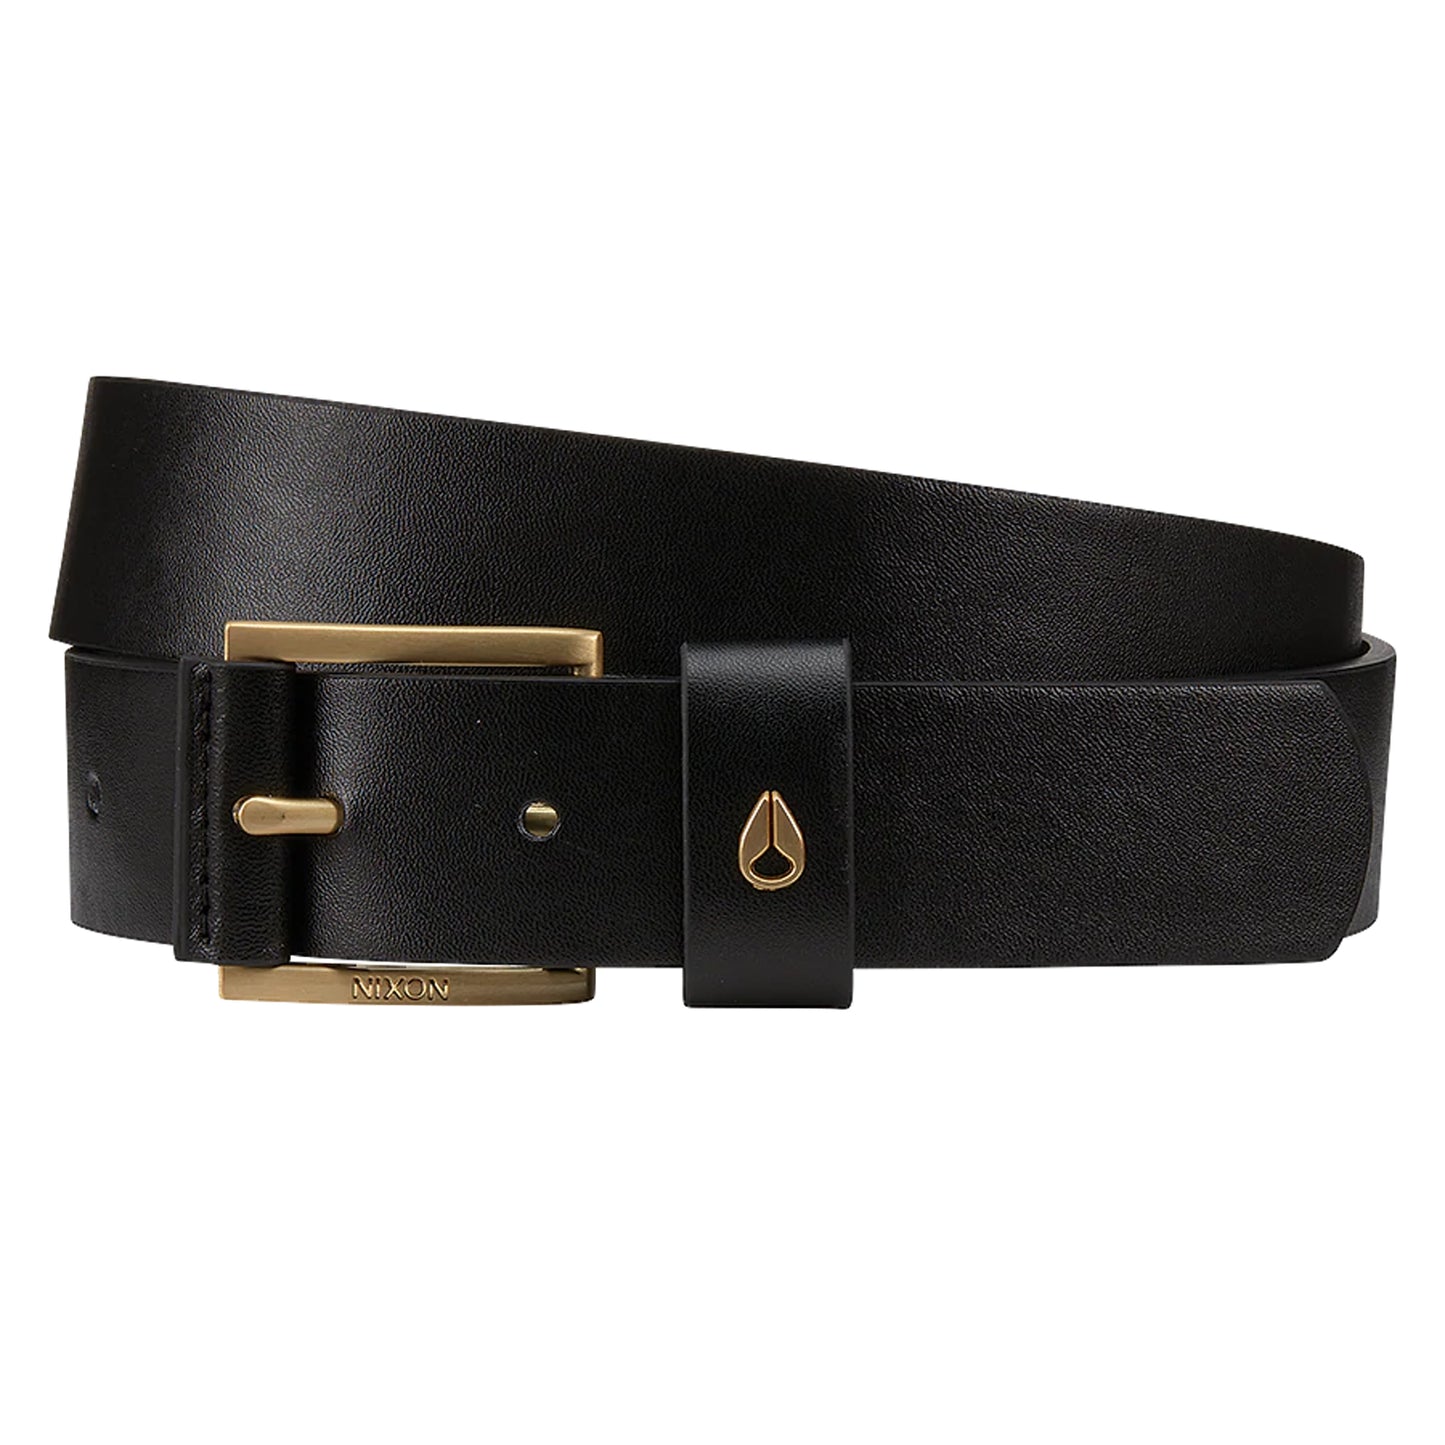 Nixon Americana Vegan Leather Belt Black/Gold. Foto de frente.